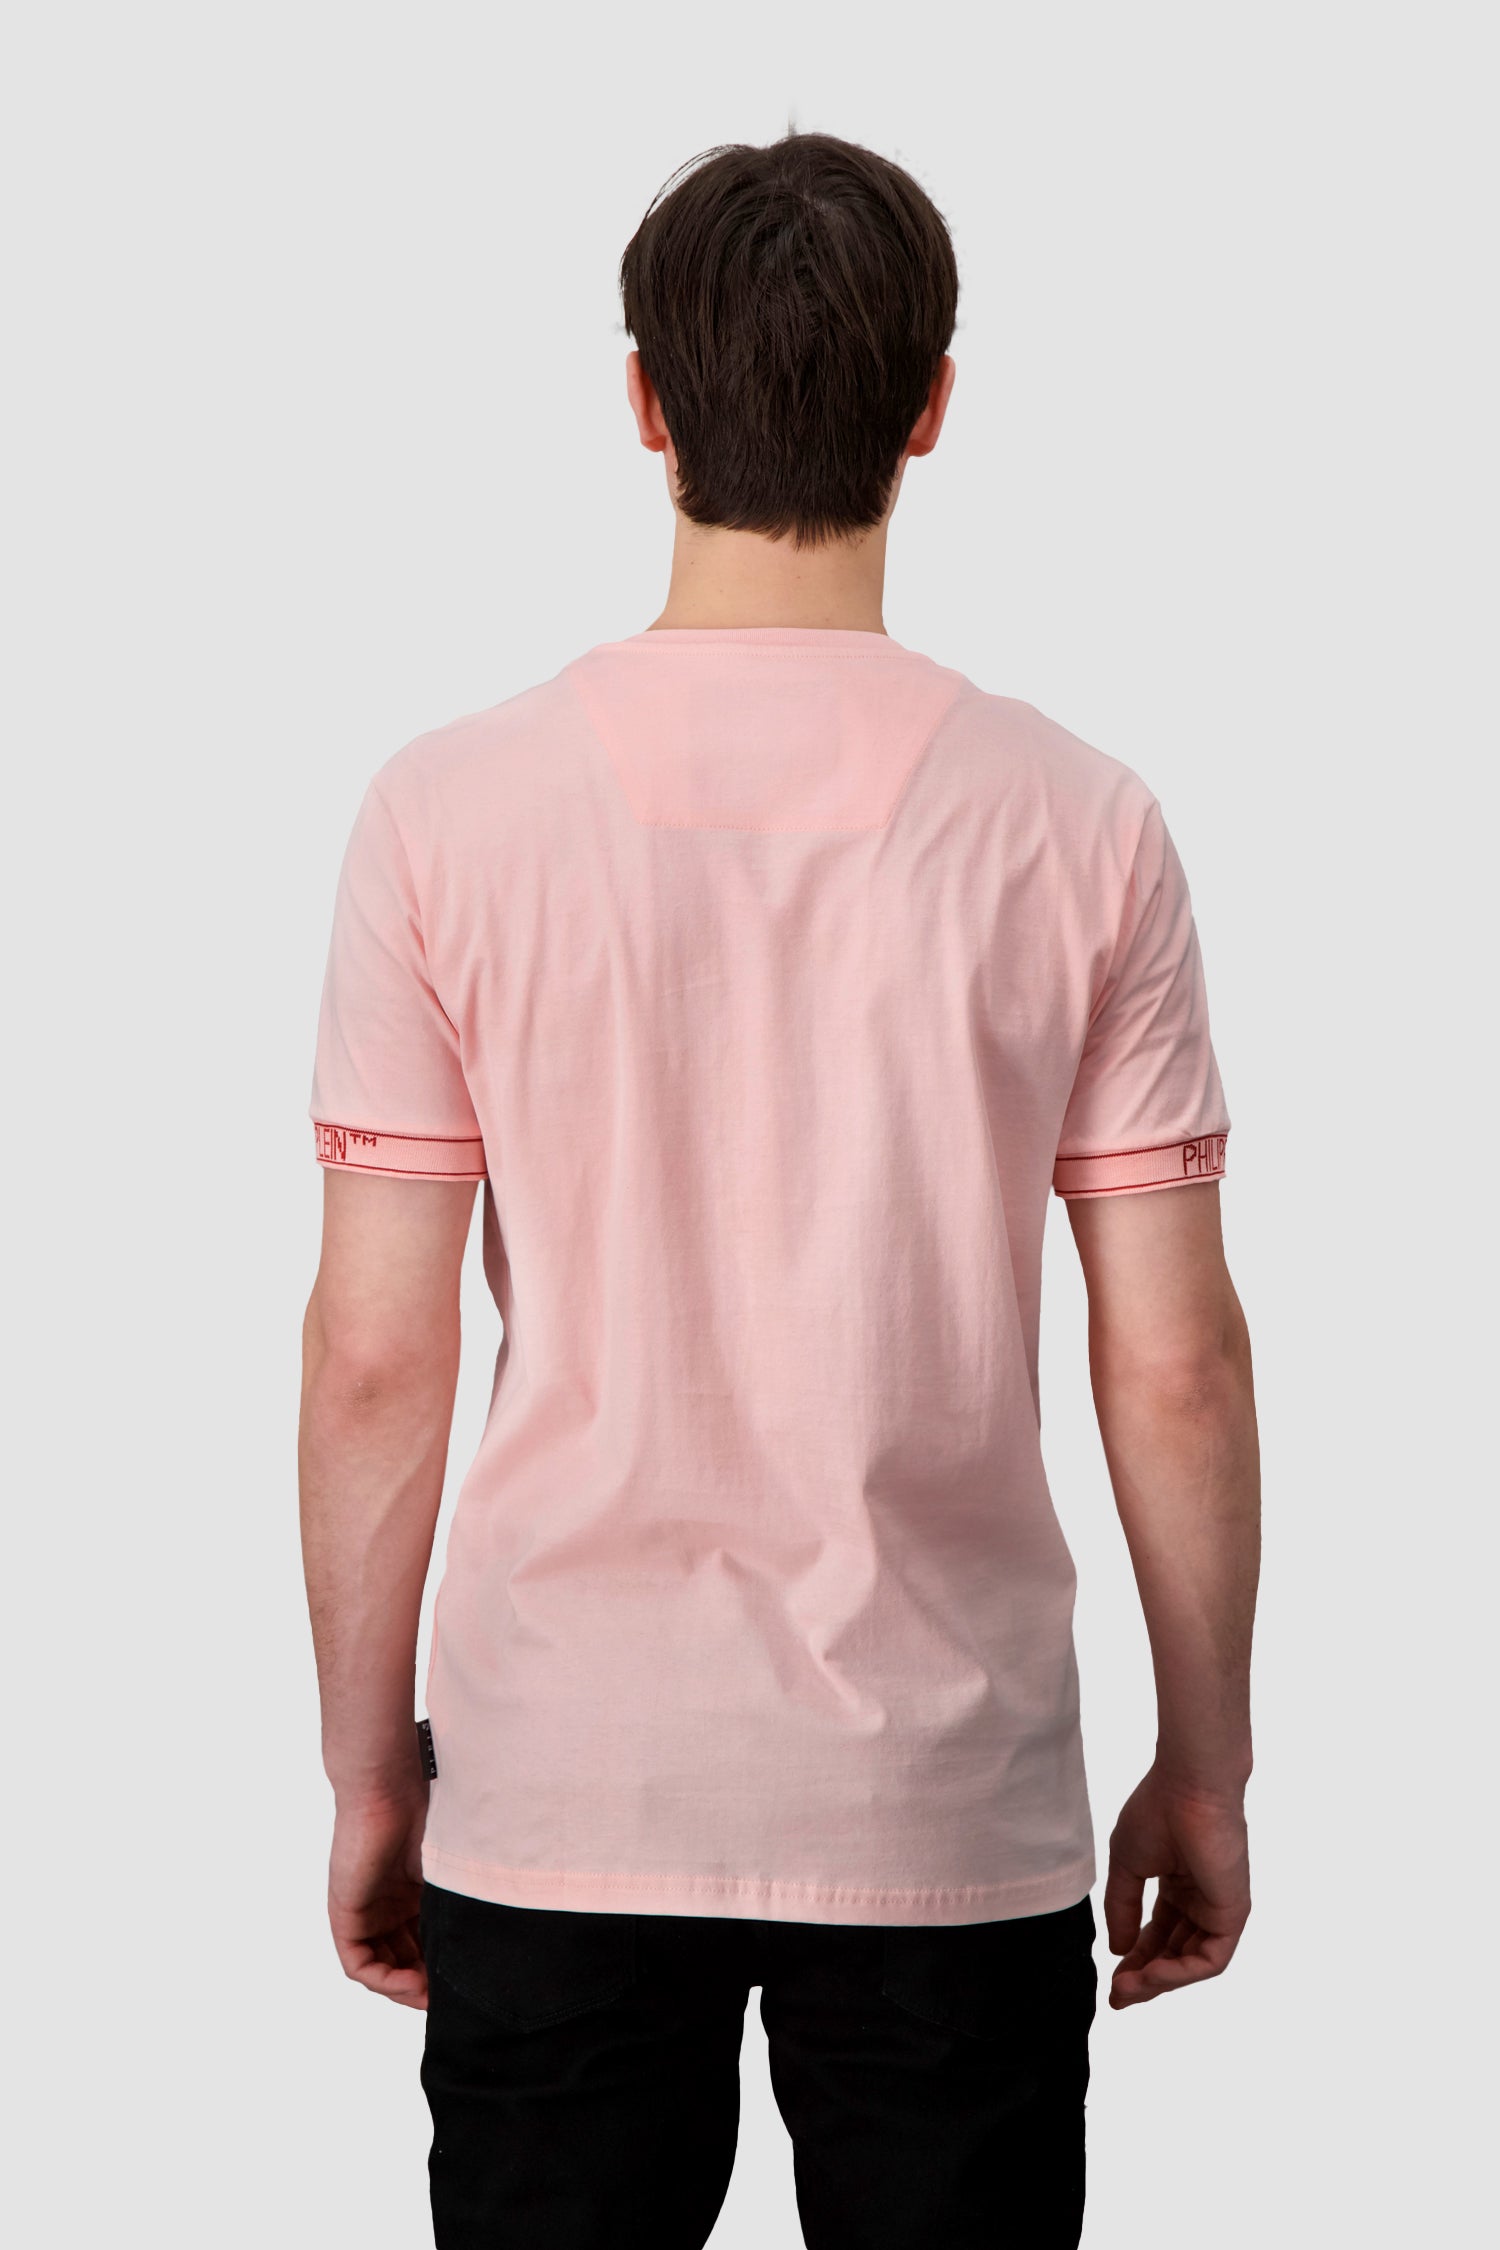 Philipp Plein Rose/Pink V-Neck SS T-Shirt